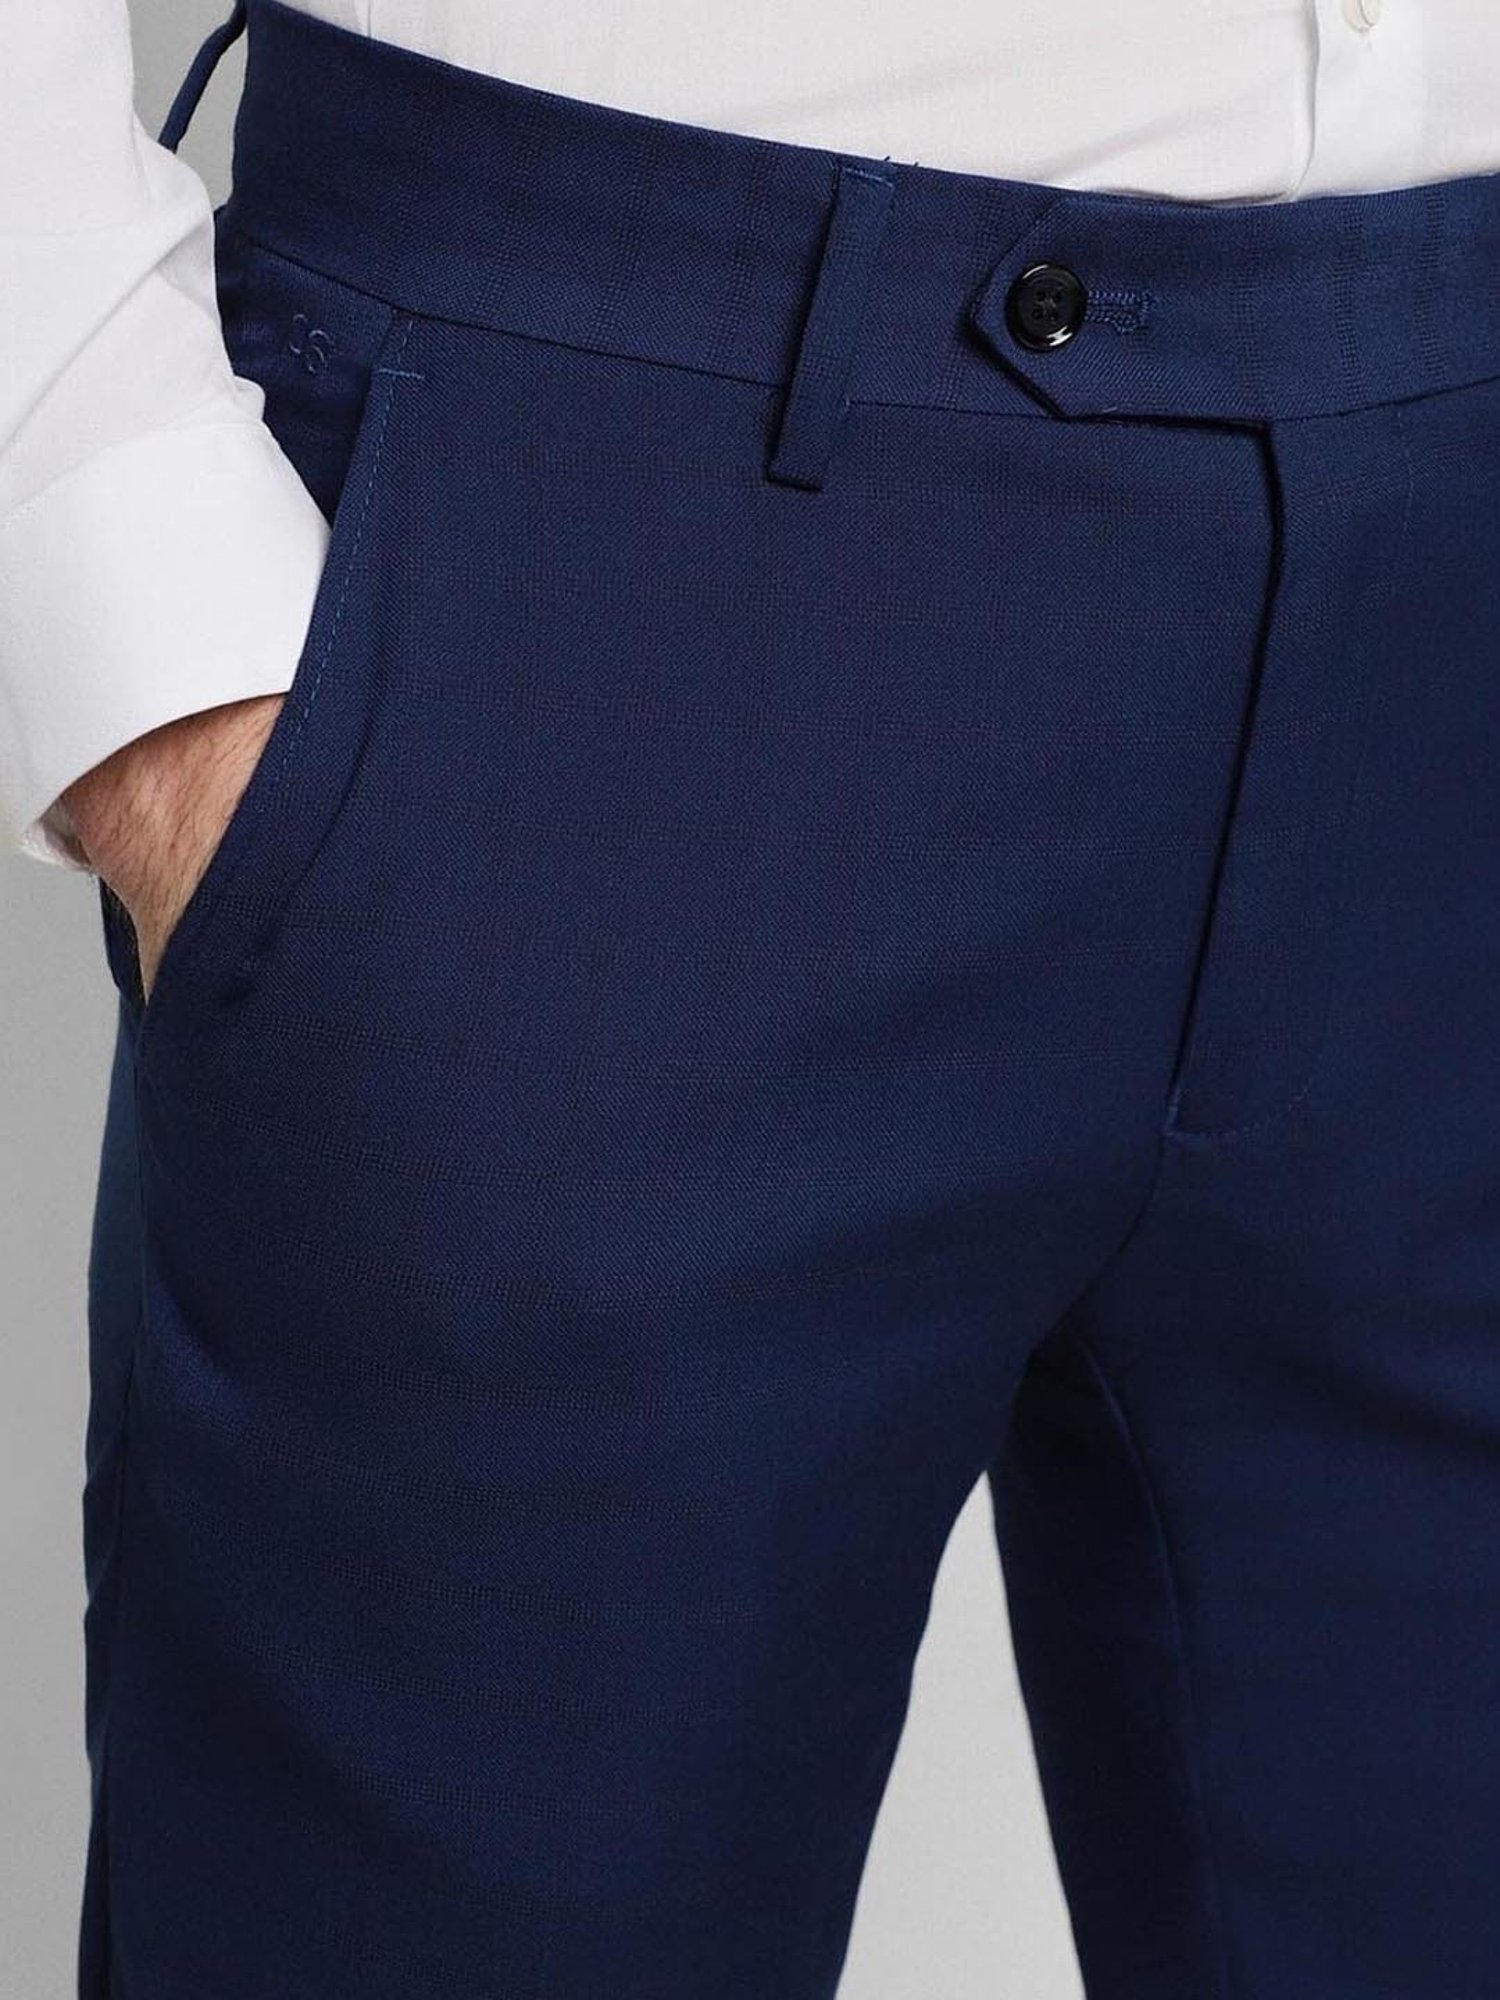 Marc Darcy | cALLUM nAVY Trouser | The Shirt Store